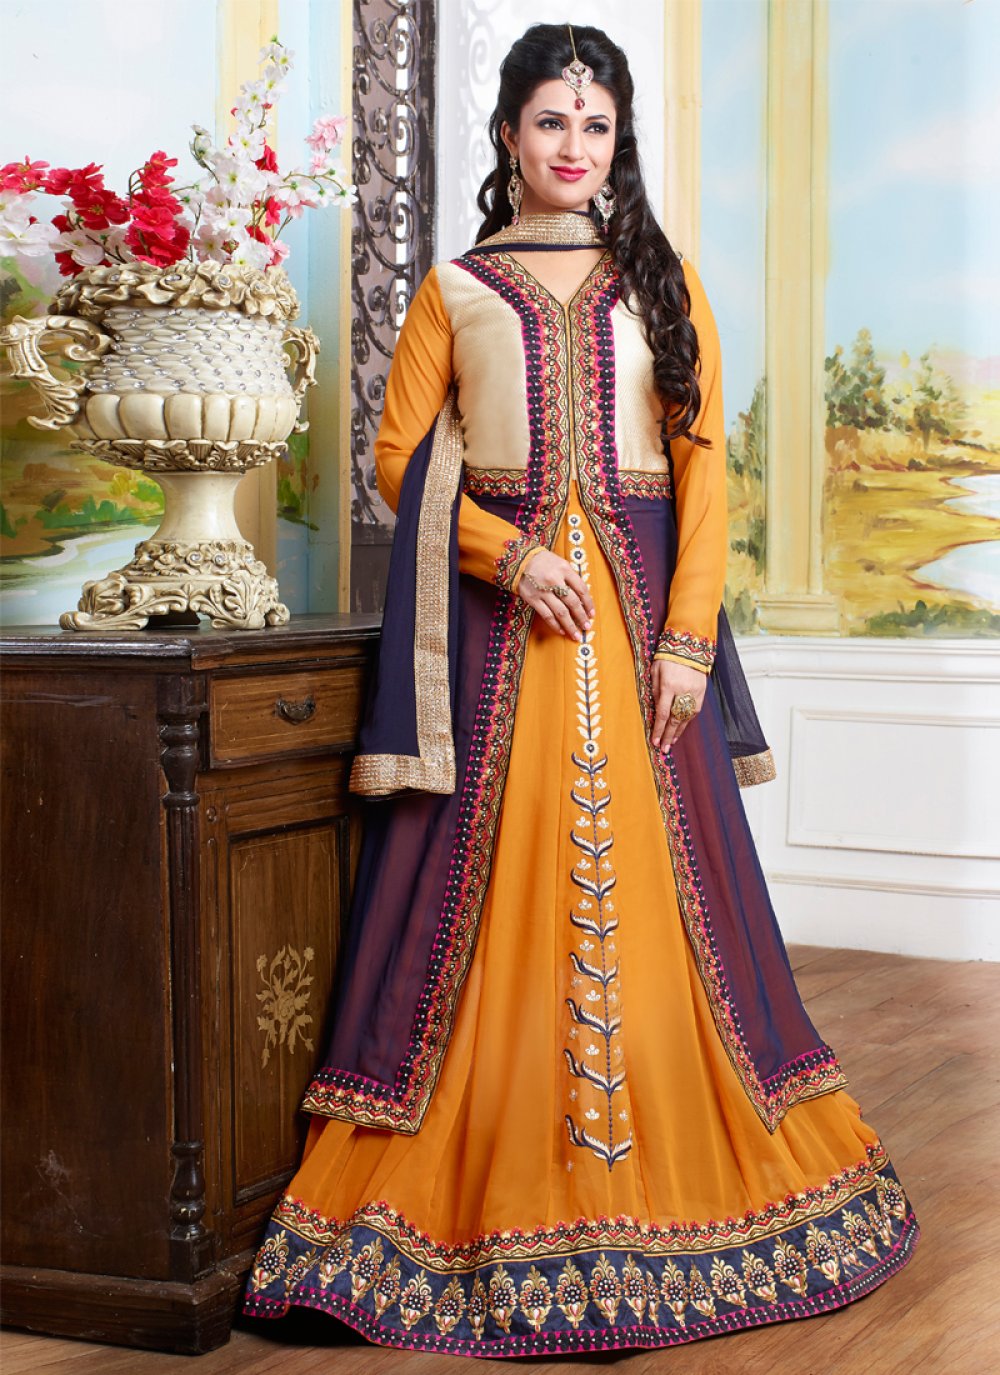 divyanka tripathi wedding - KALKI Fashion Blog